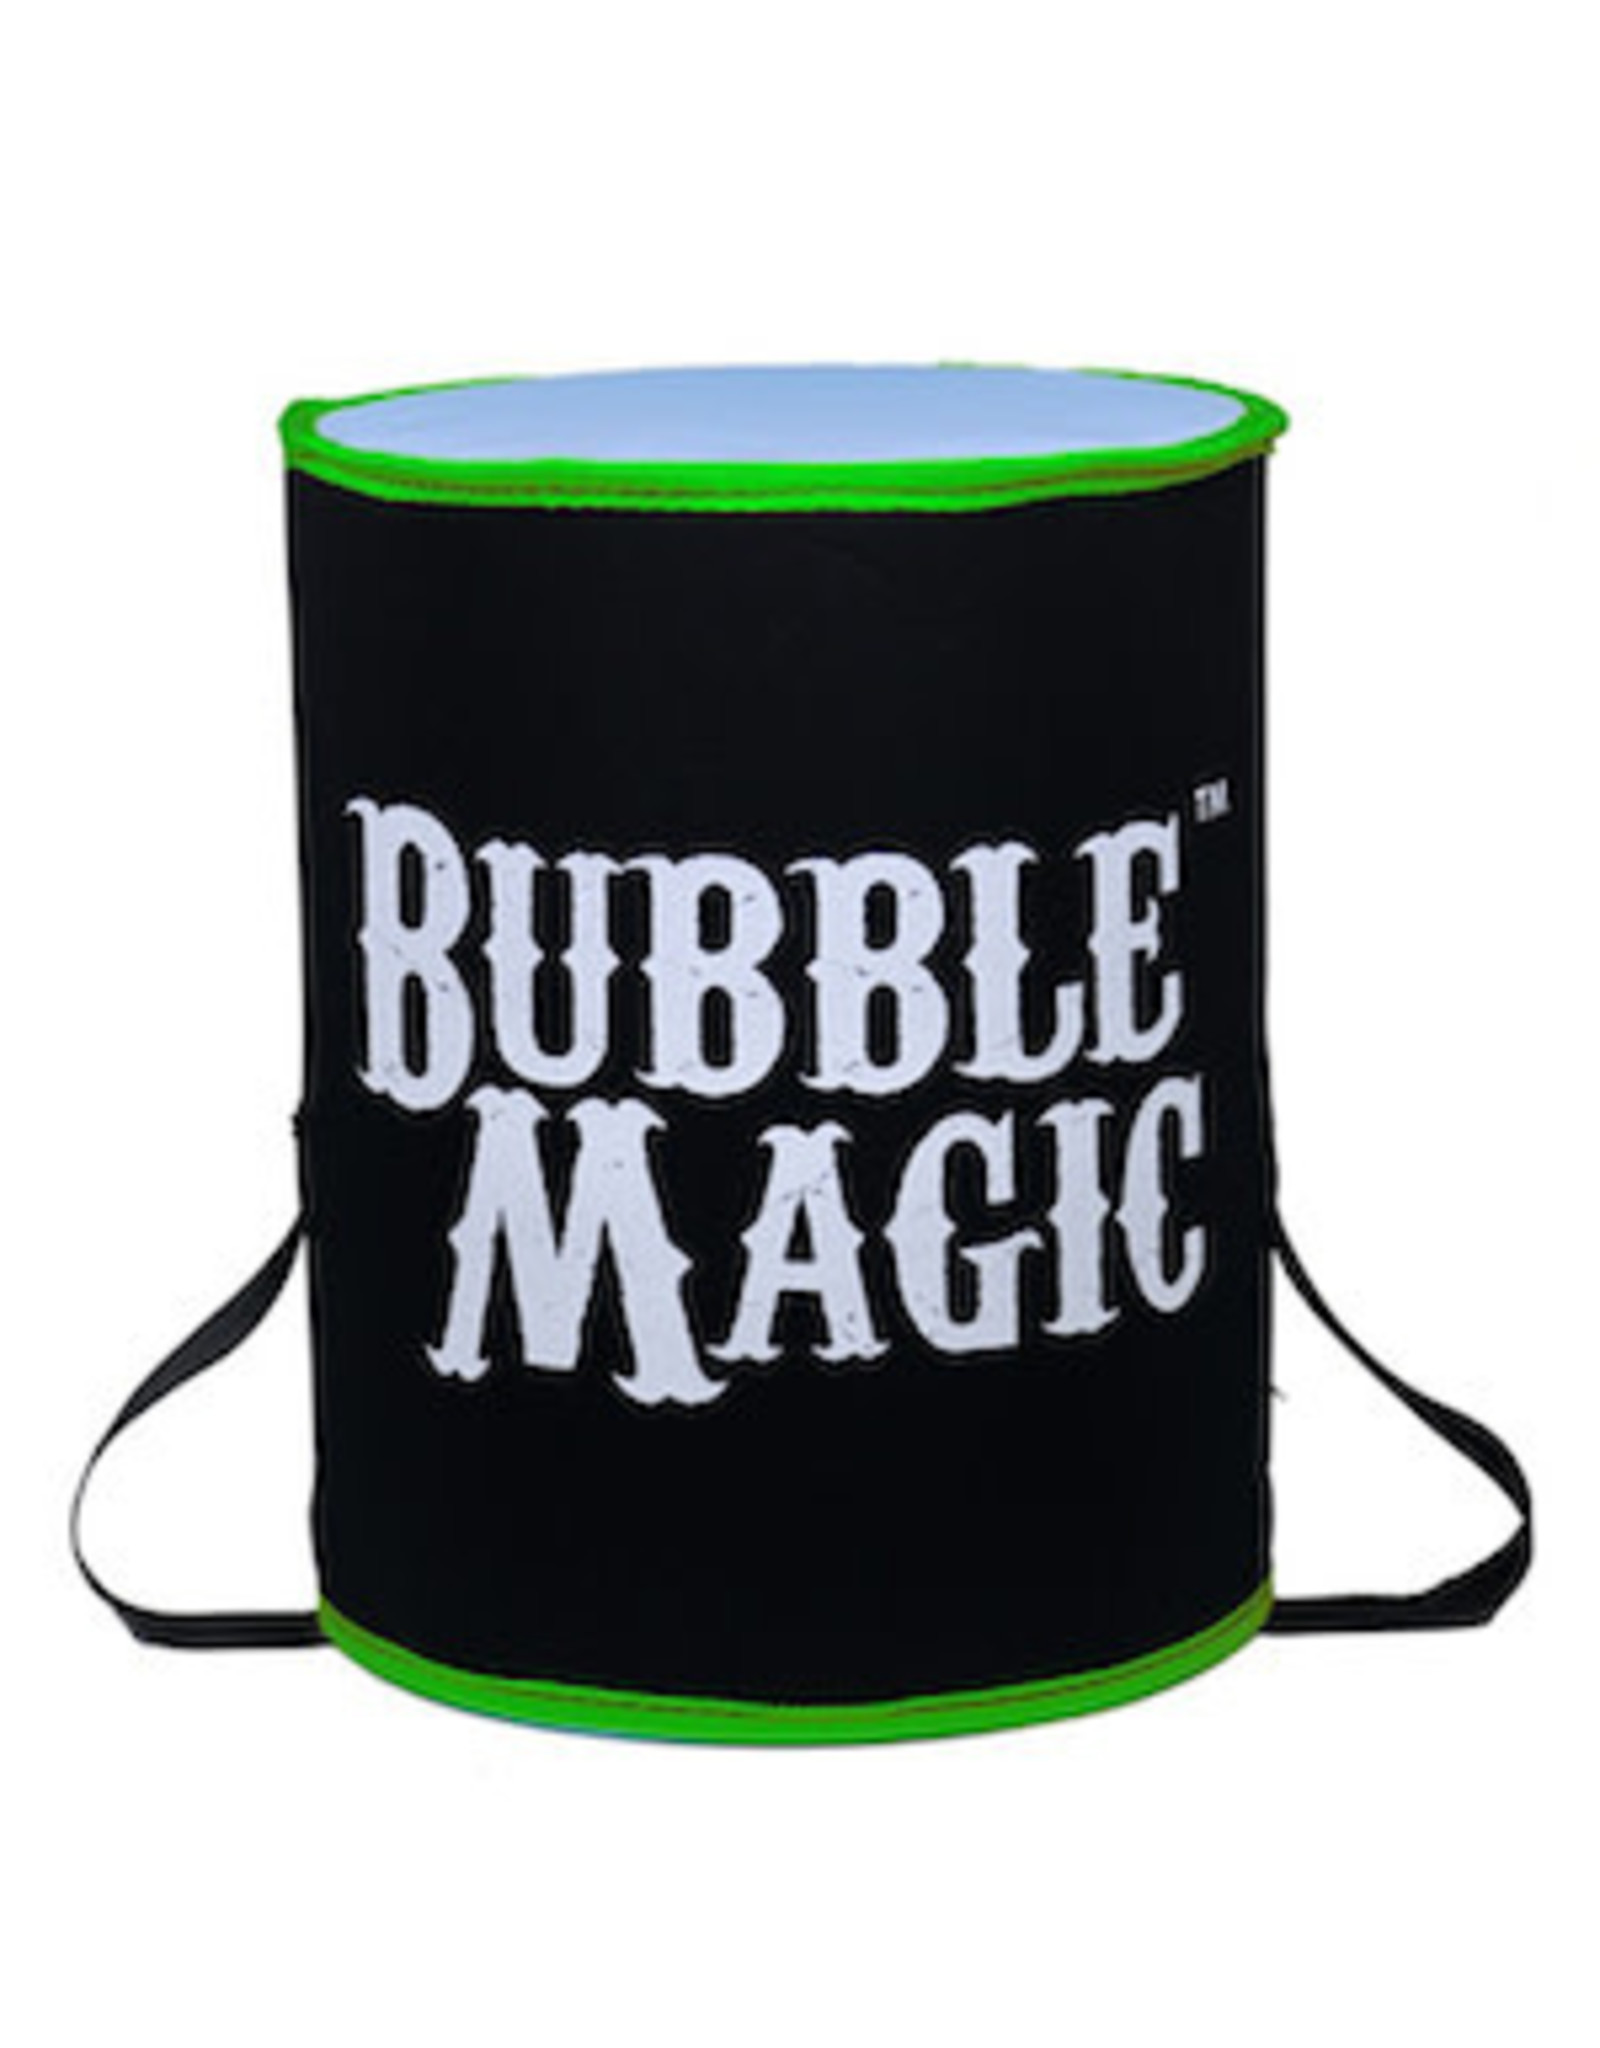 Bubble Magic Bubble Magic Extraction Shaker Bag 190 Micron